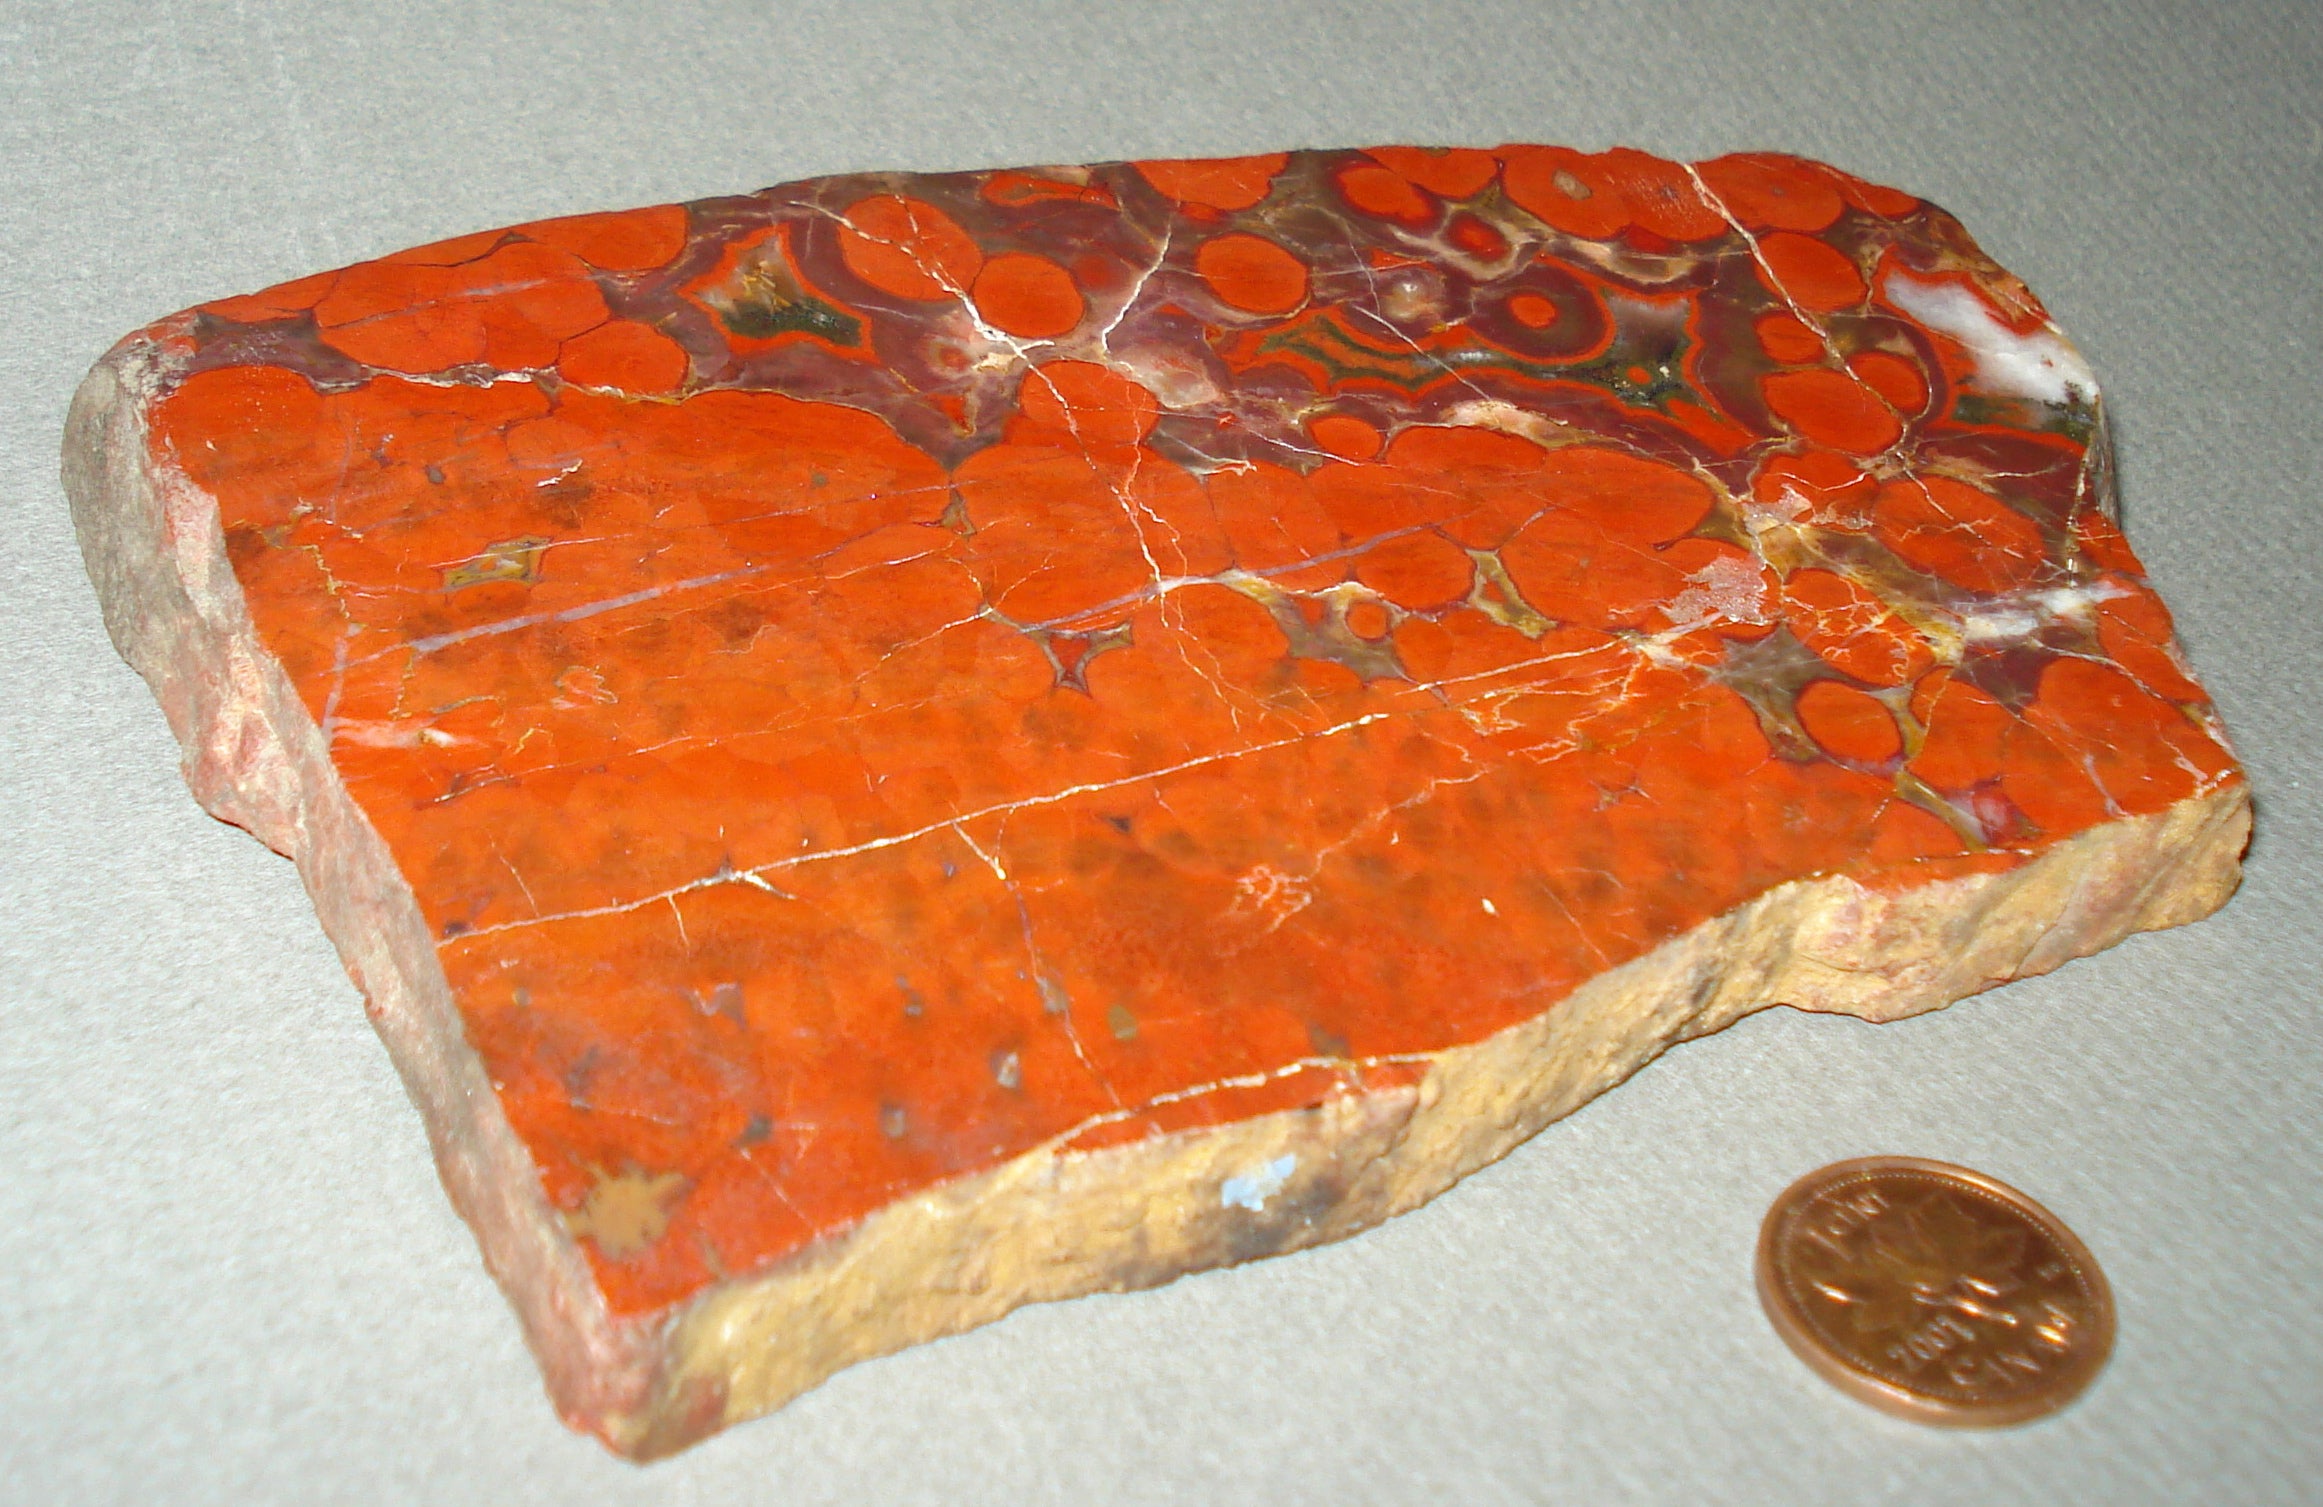 Mexican Quartz Geodes next to a penny for size comparison